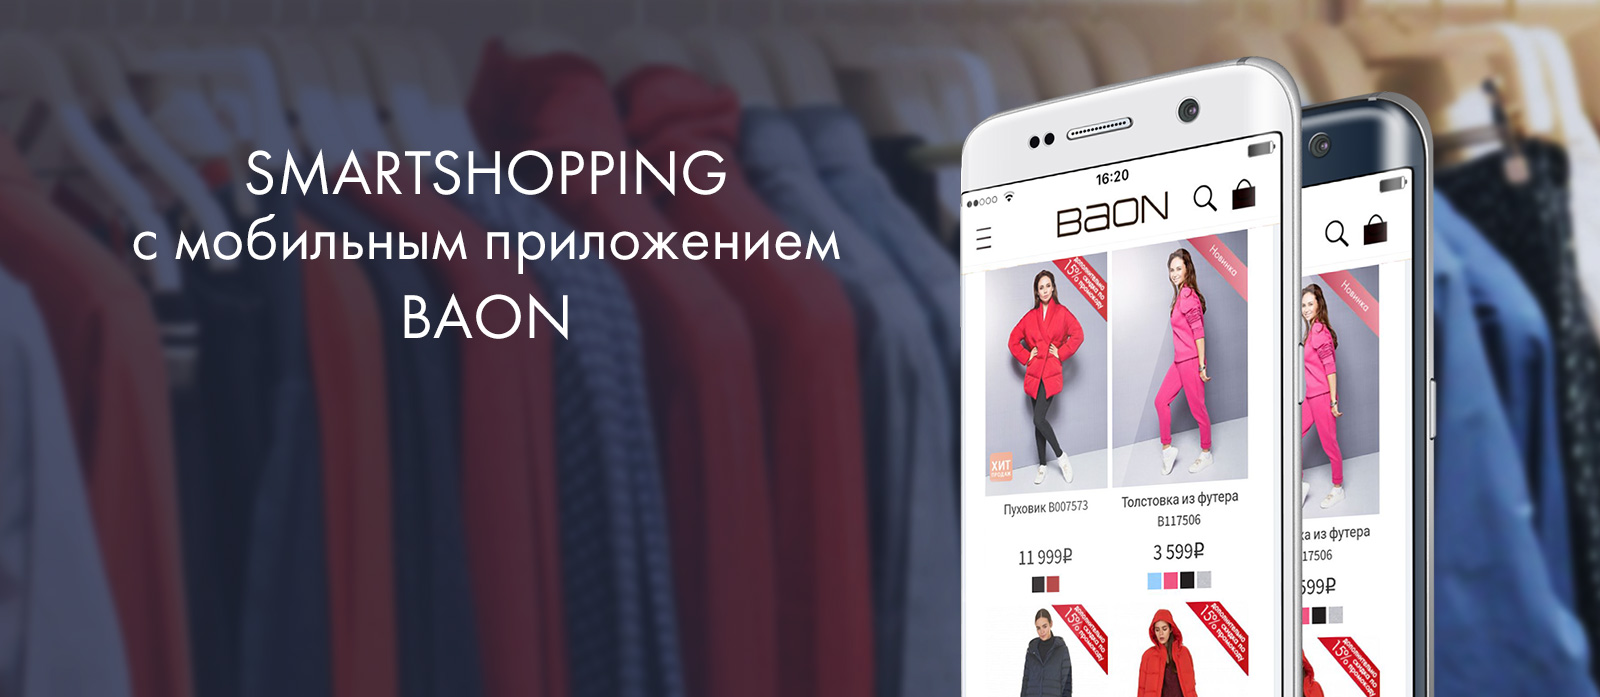 Фамилия Интернет Магазин Одежды Каталог Екатеринбург